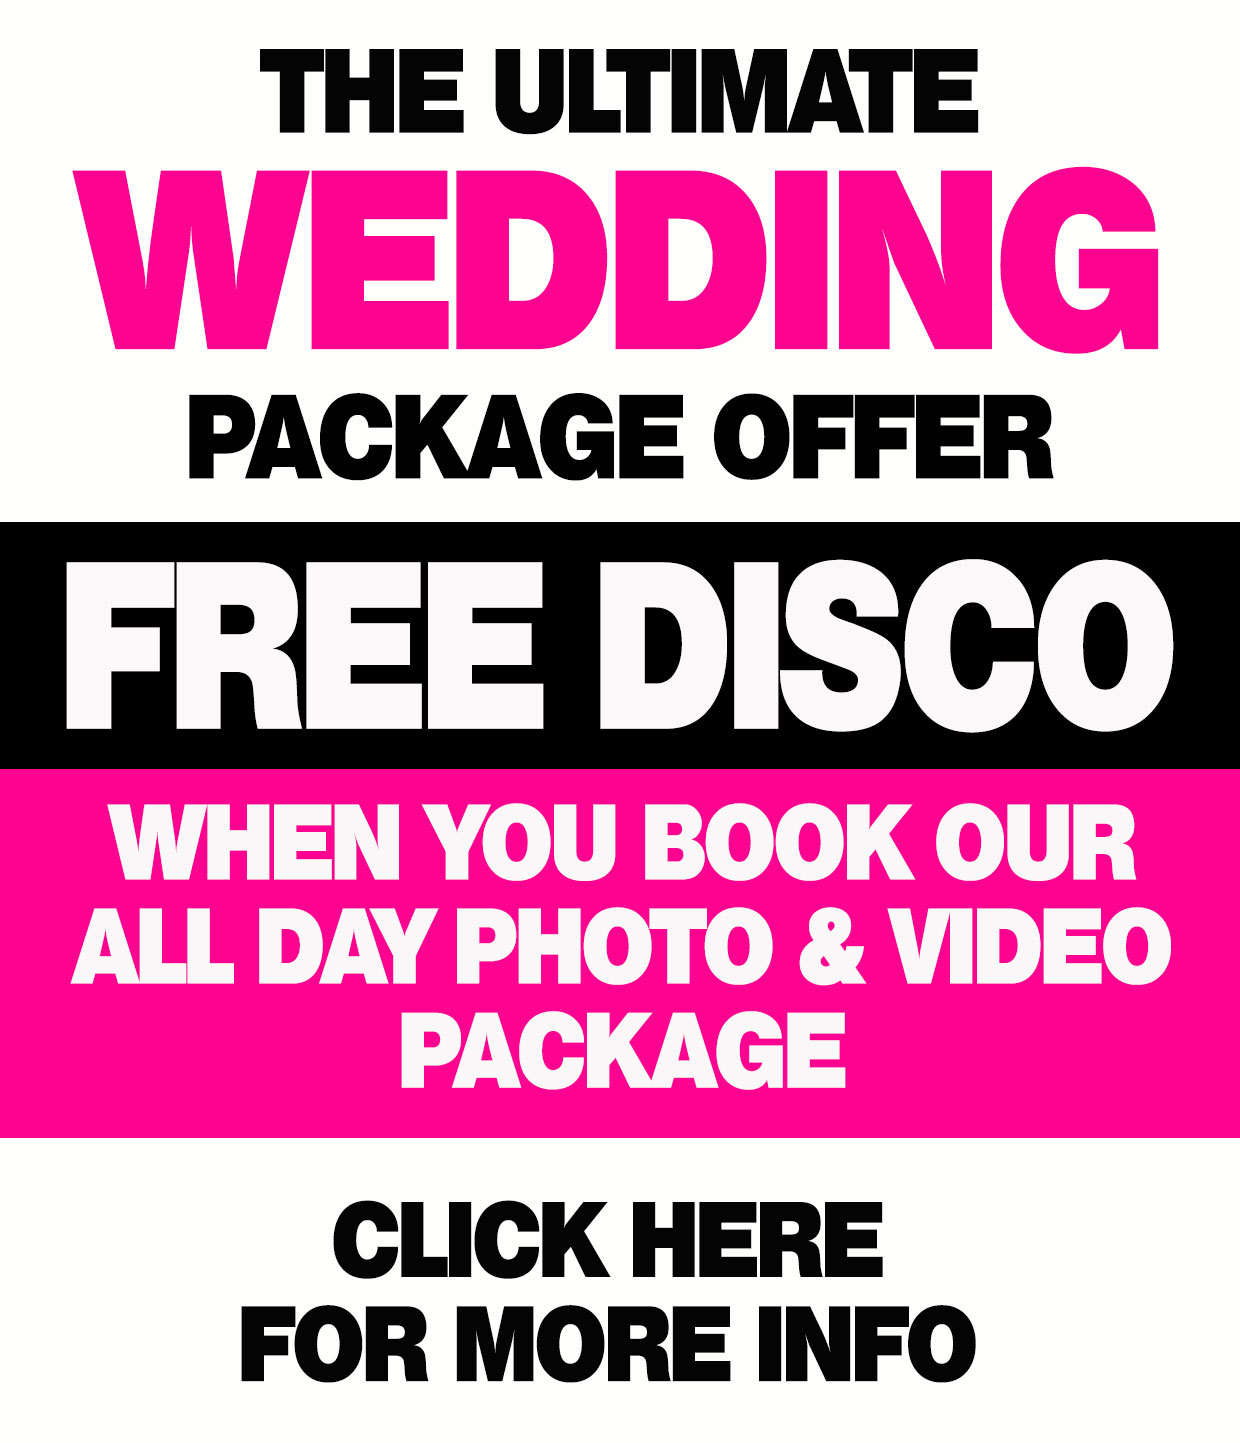 Cornwall Wedding DJ and Disco